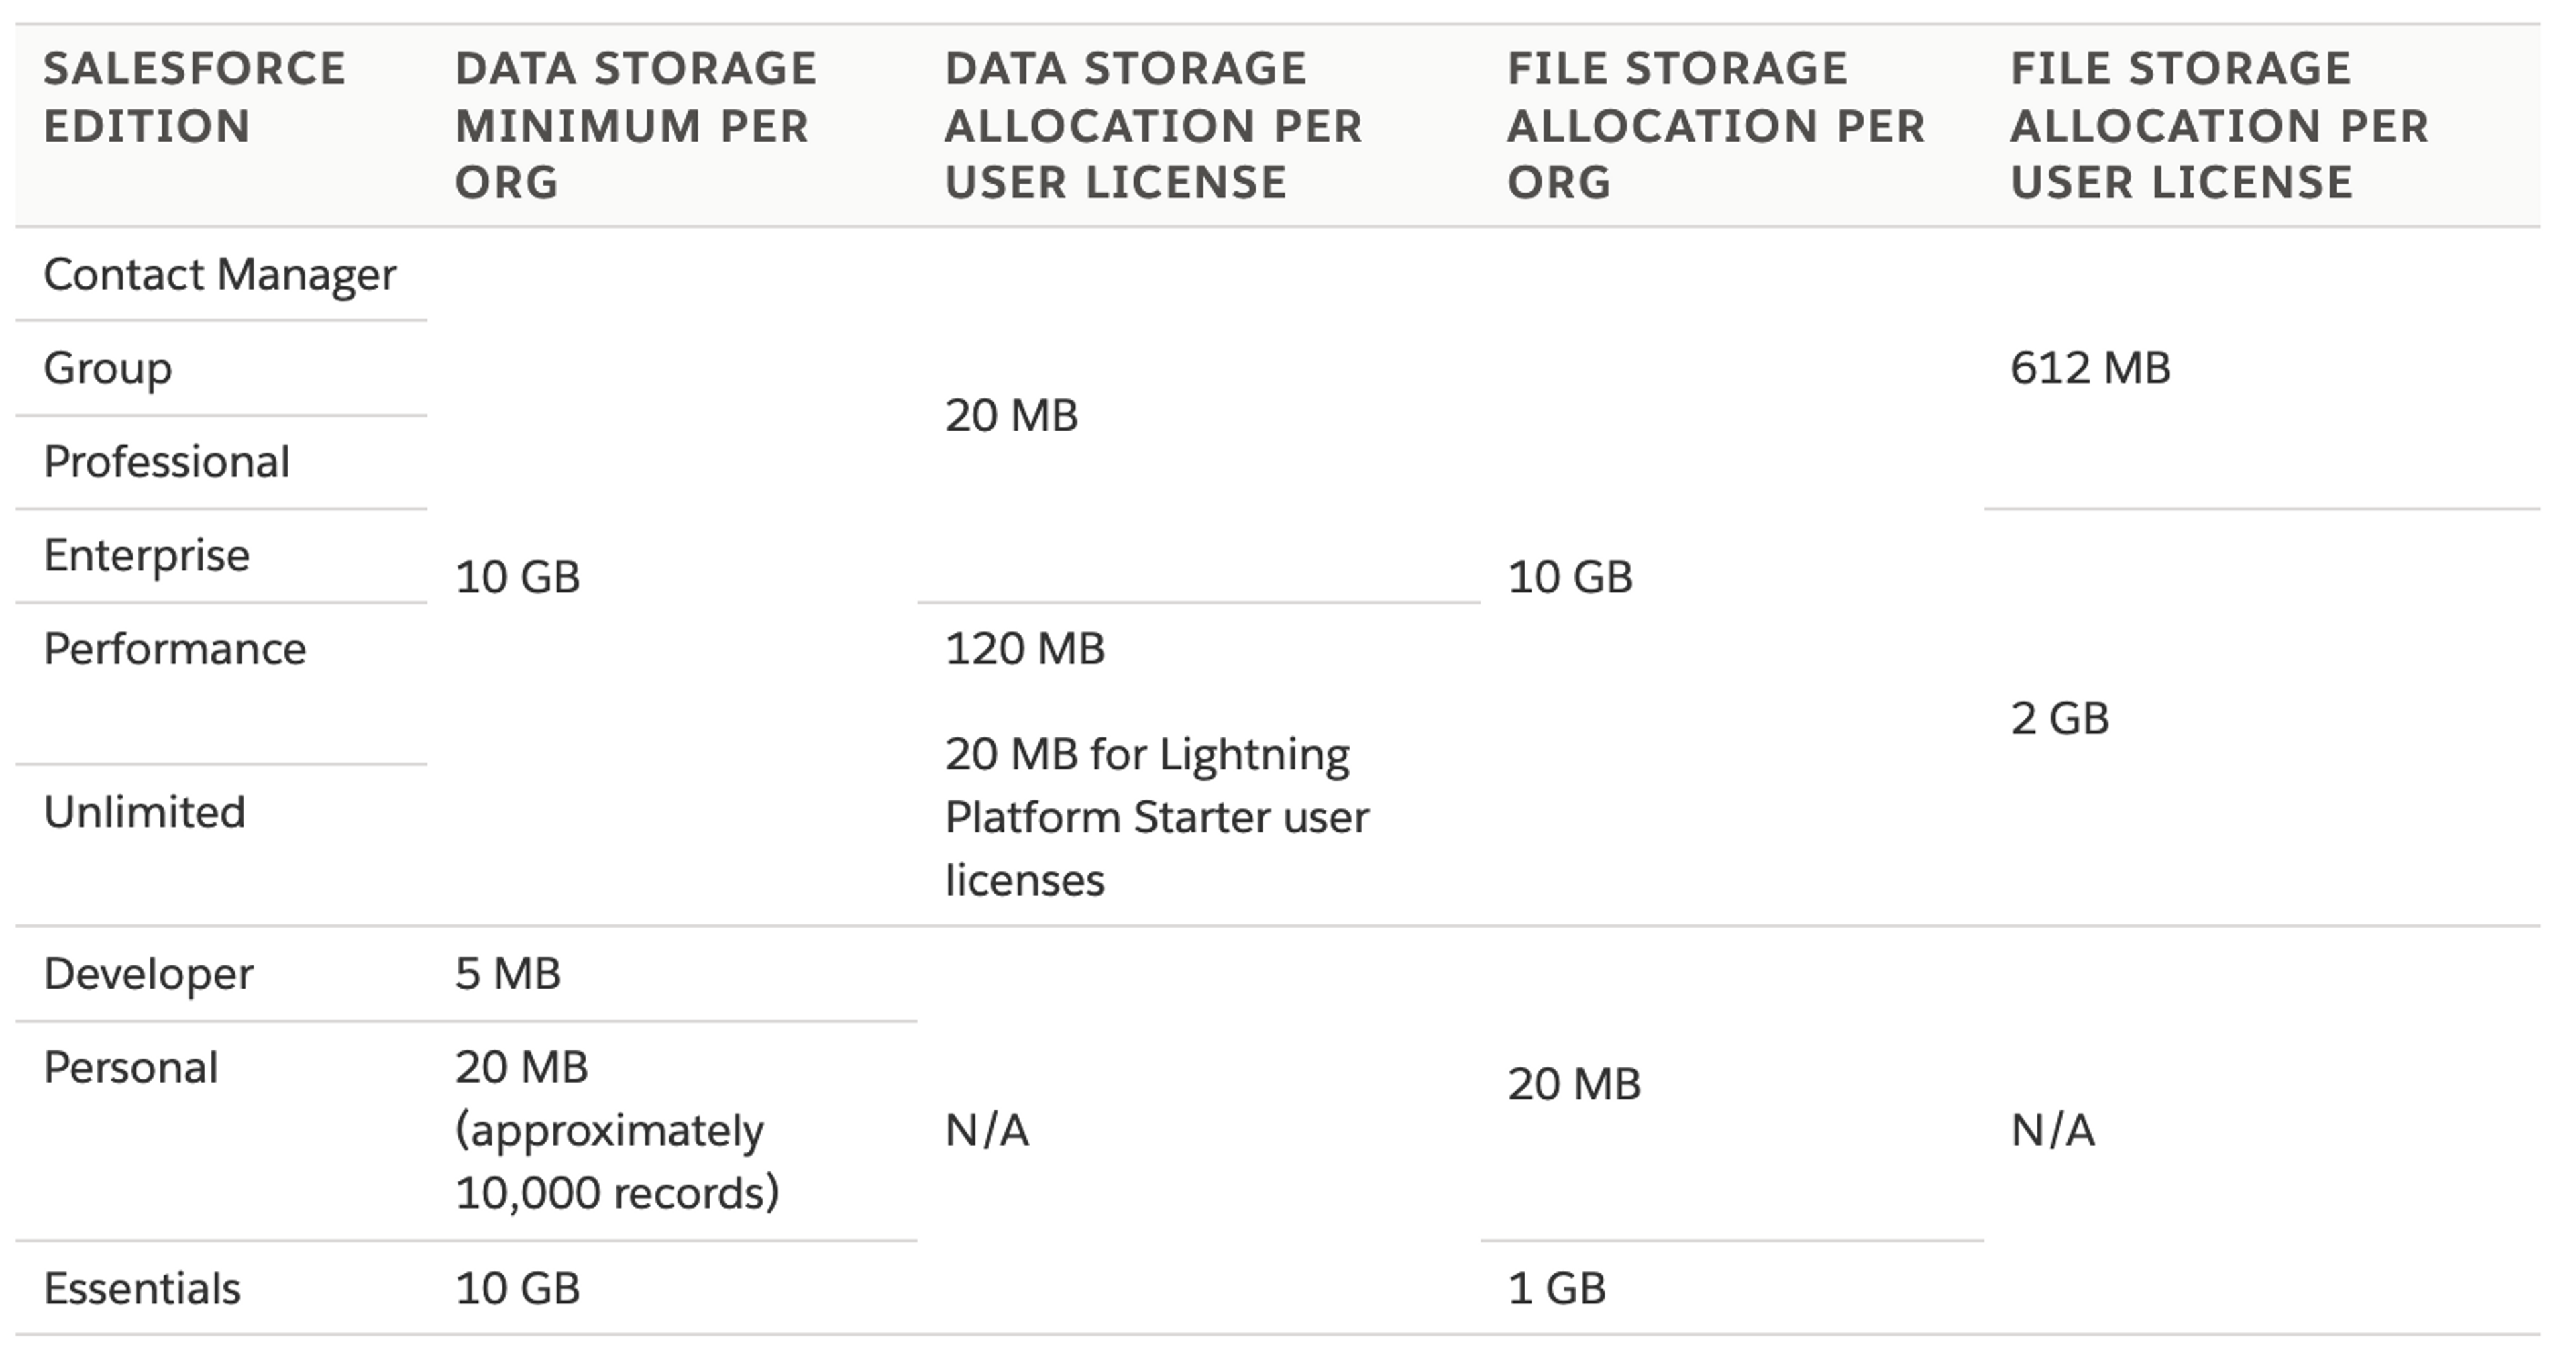 Data storage allocations